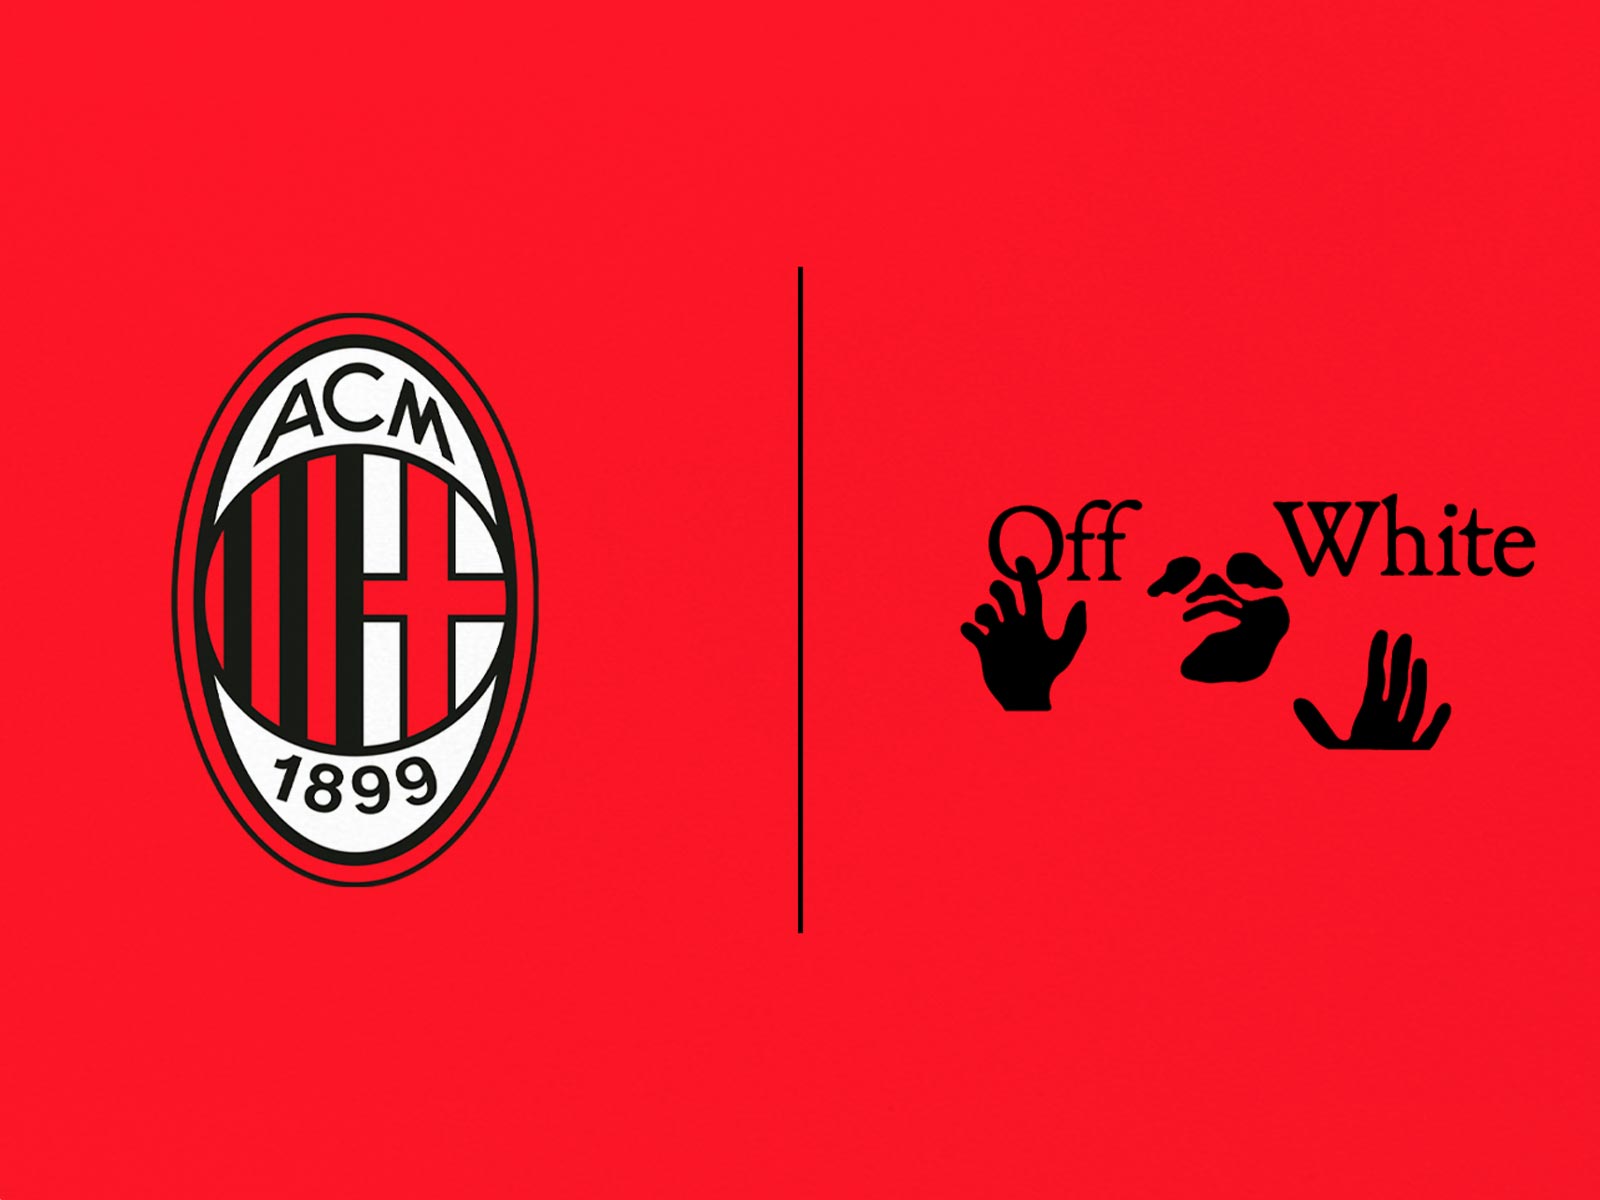 Off-White™ se asocia con el AC Milan